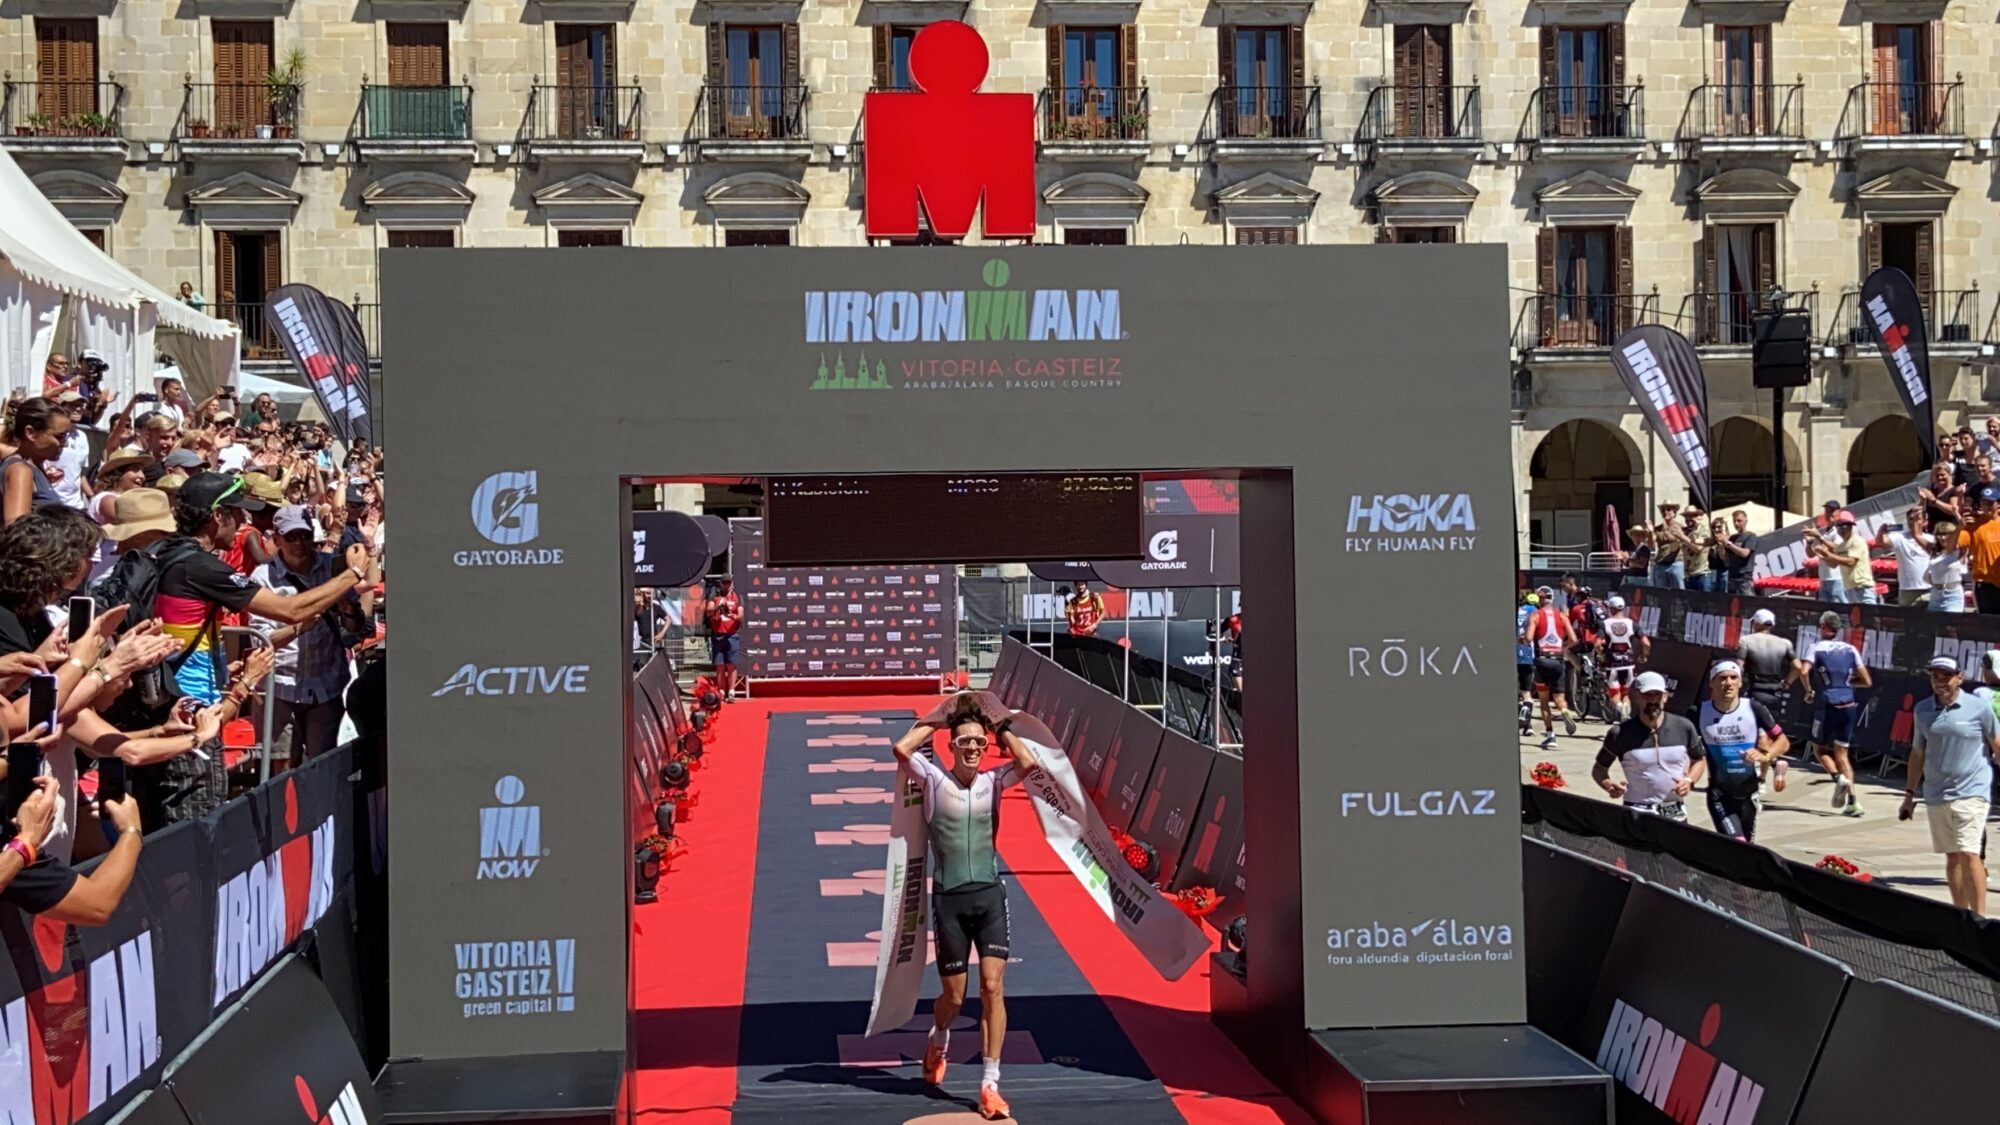 Ironman Vitoria triunfa en una jornada sofocante